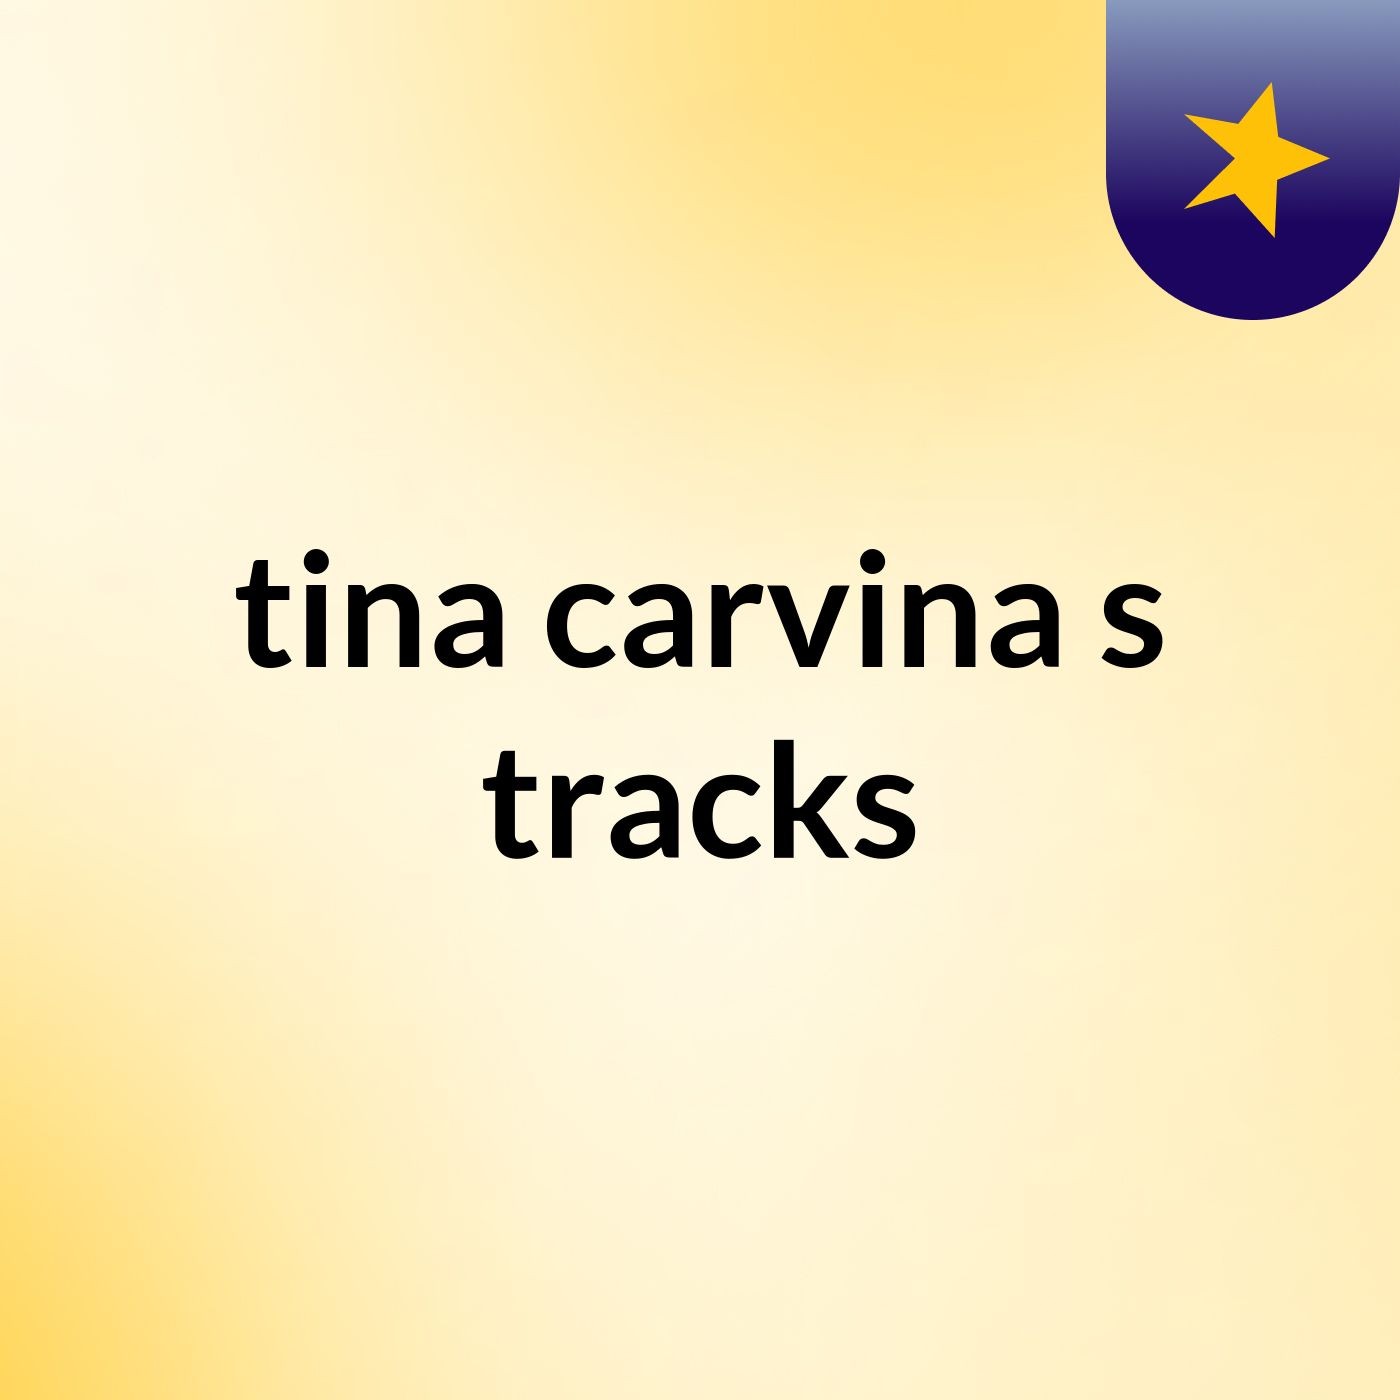 tina carvina's tracks